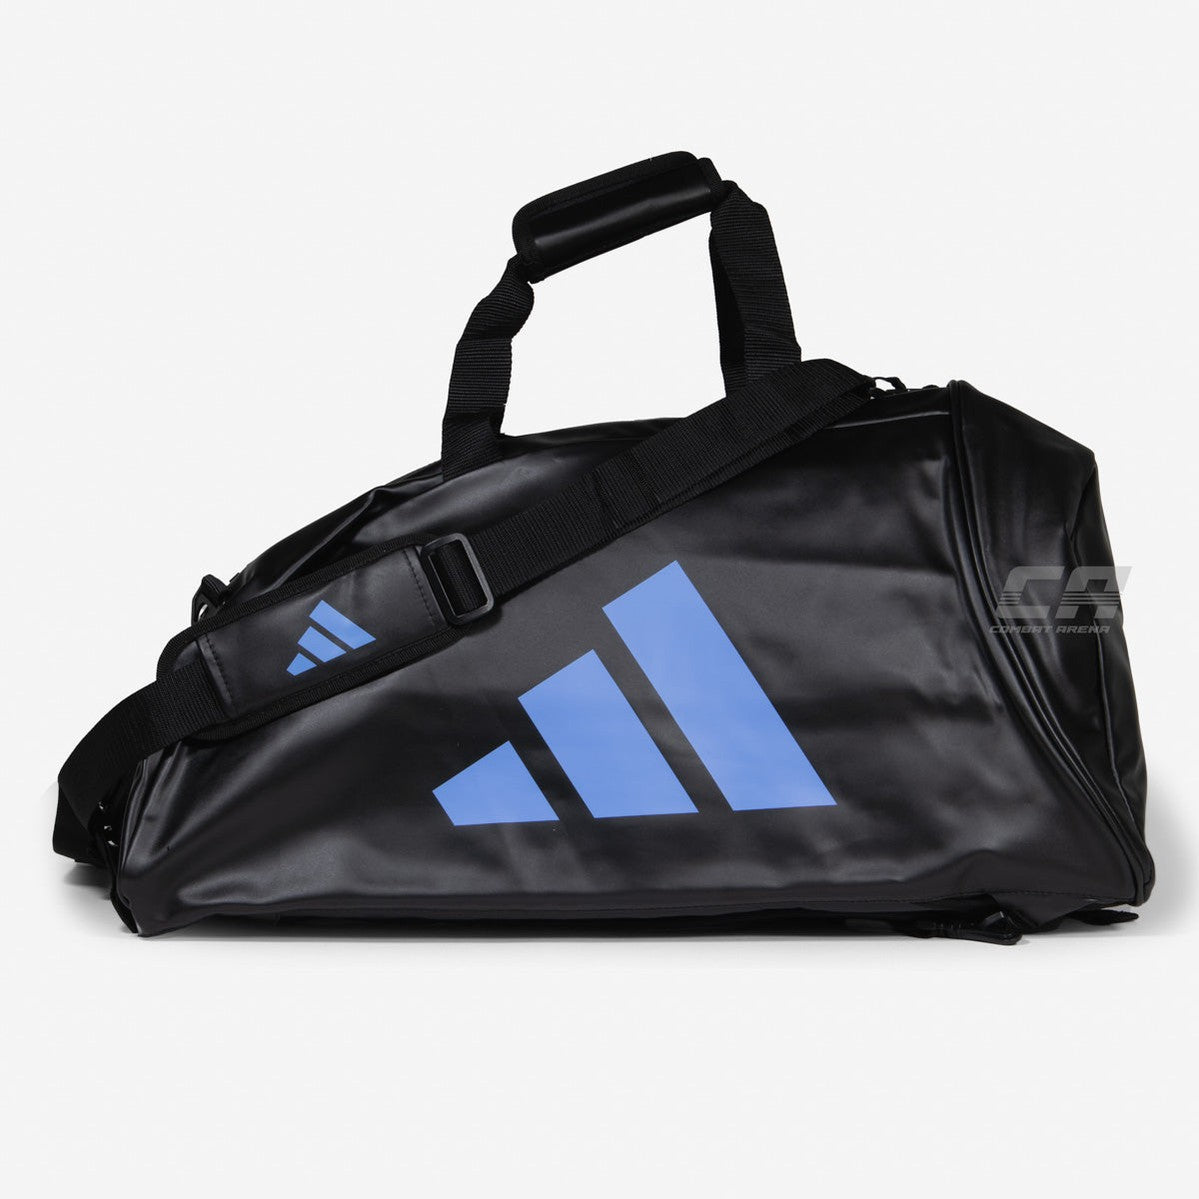 Plecak Adidas 2 w 1